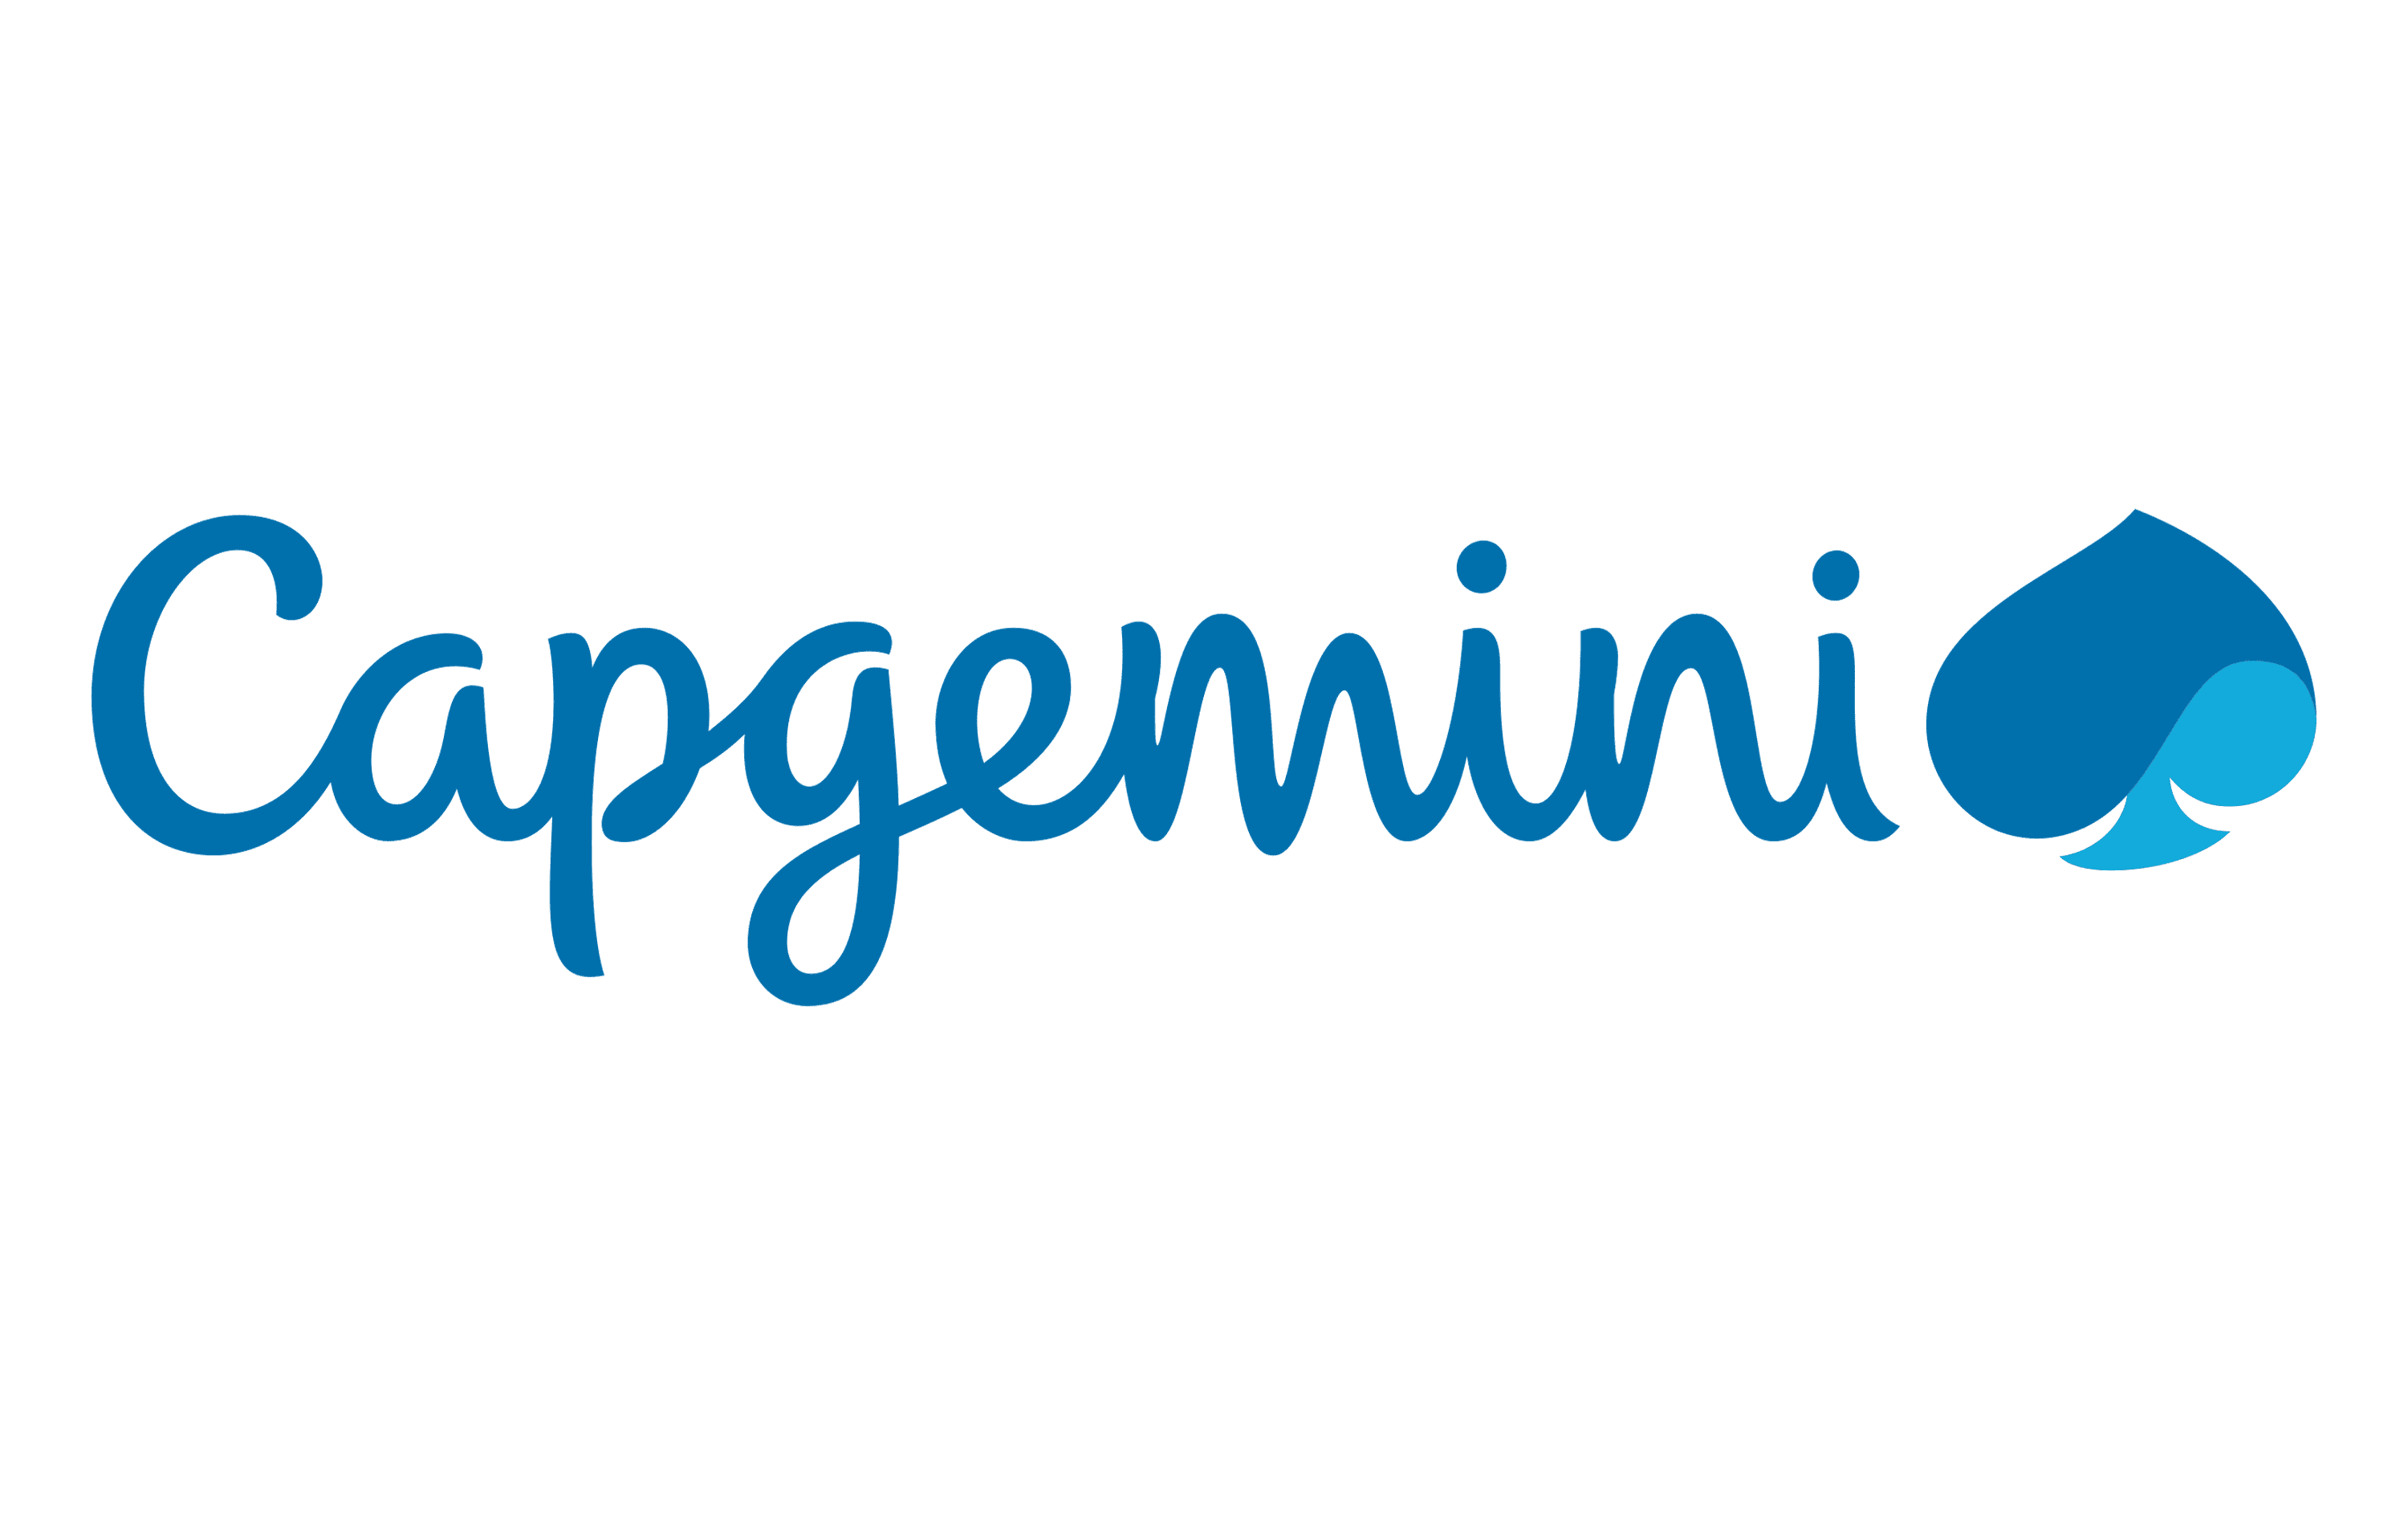 Capgemini Company Logo